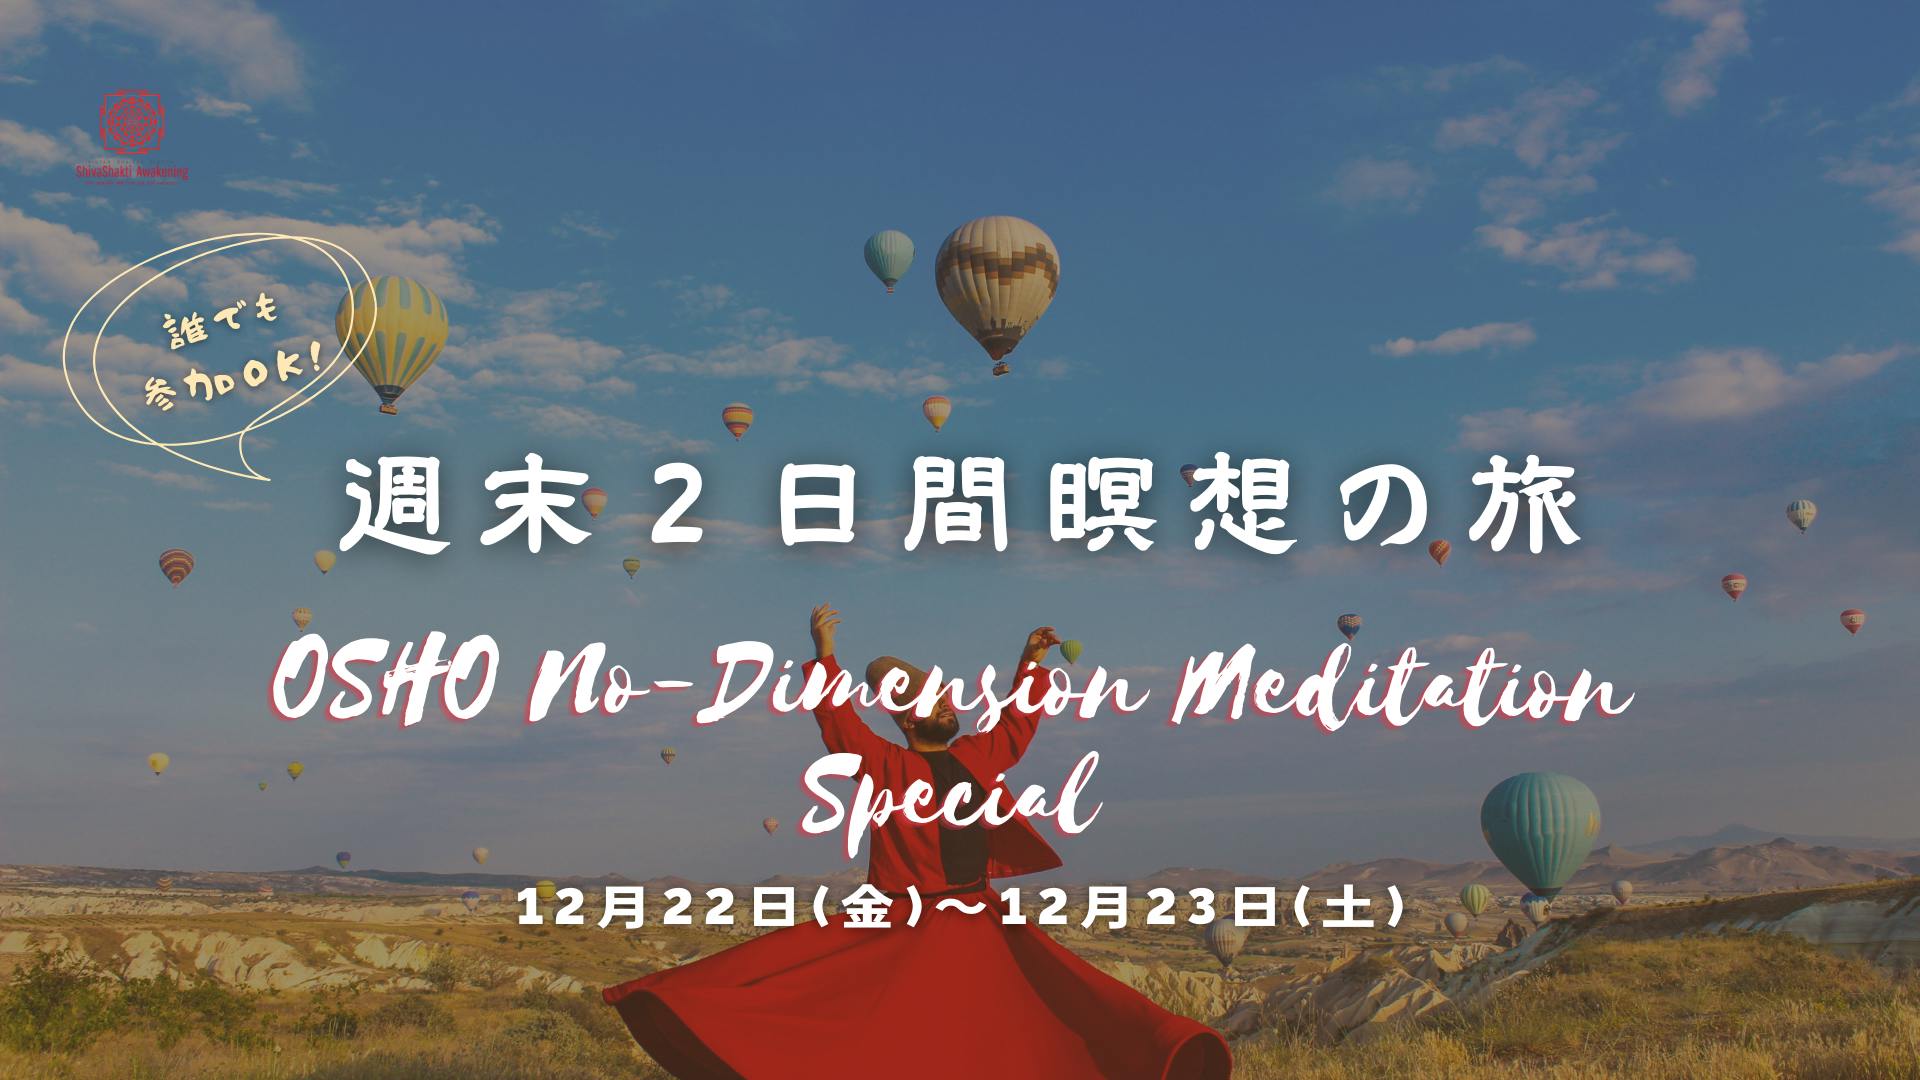 Osho No-Dimensions Meditation Special